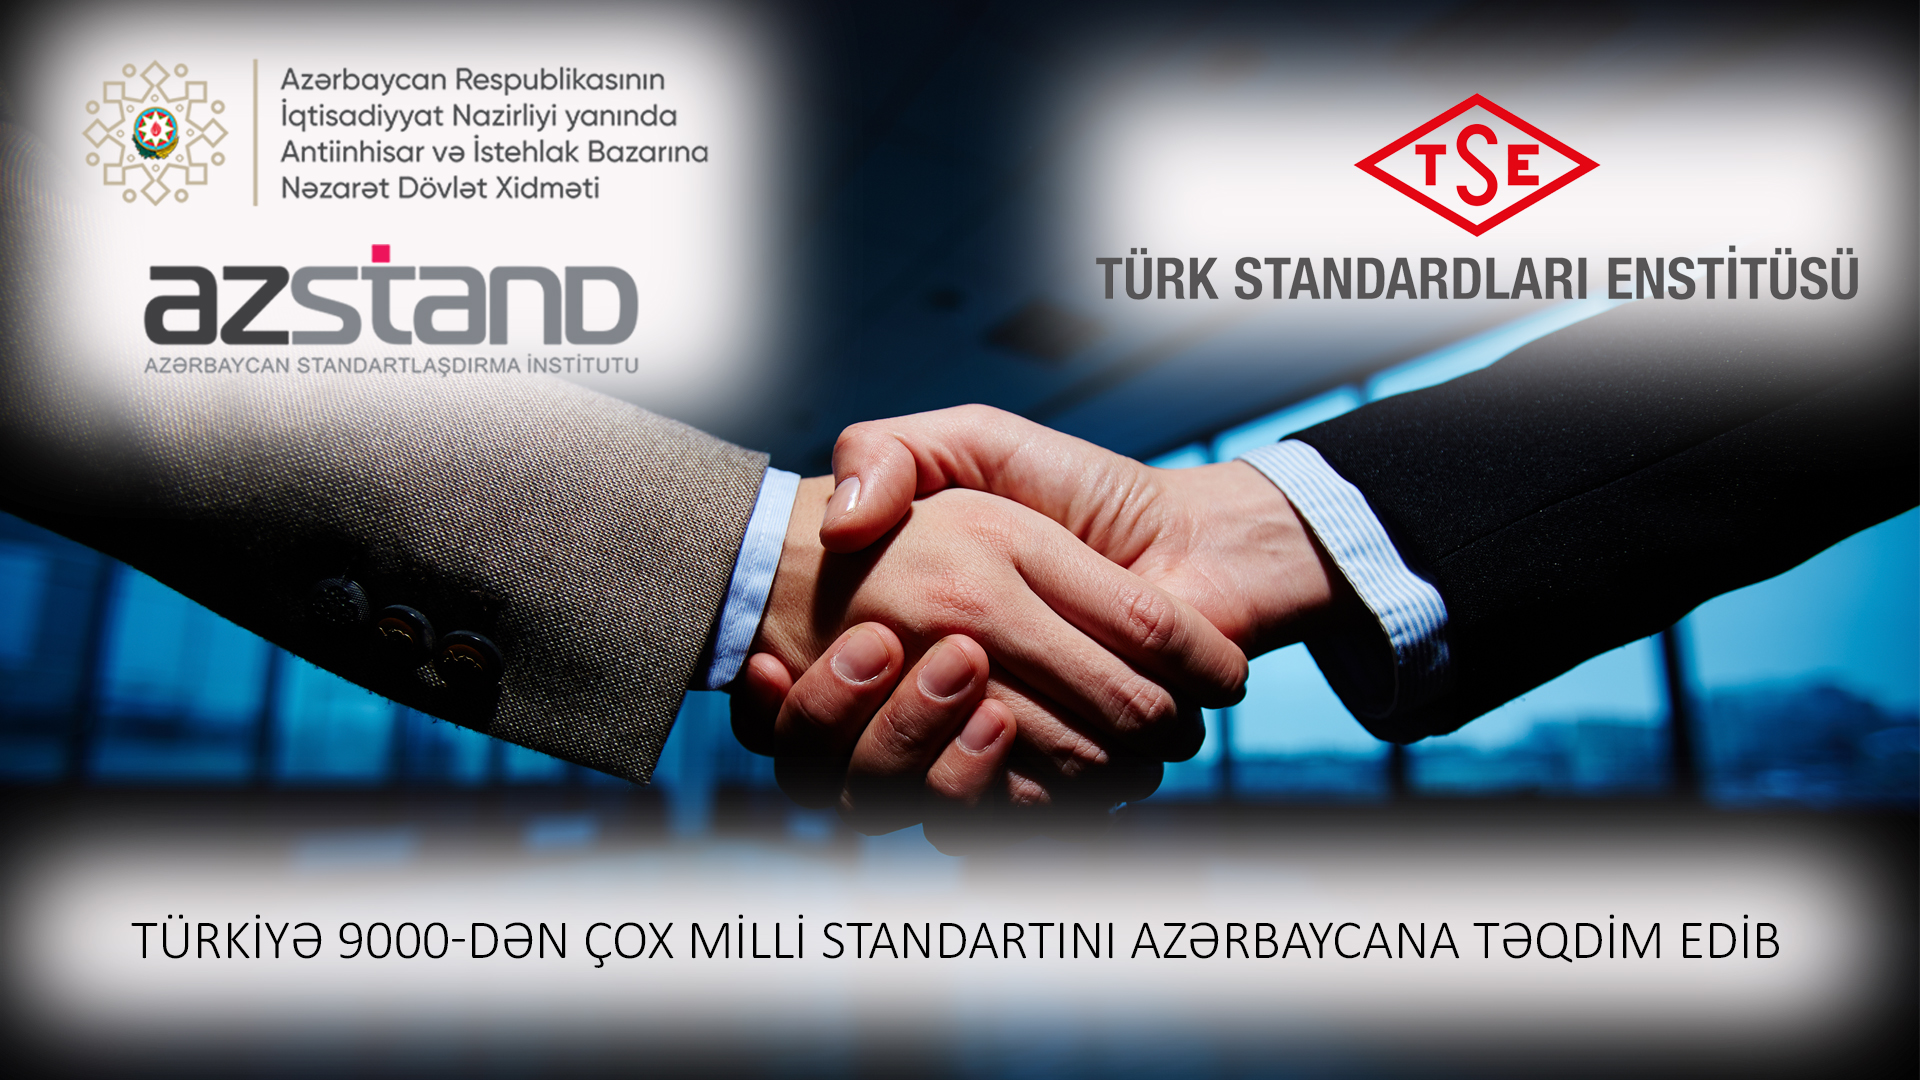 Turkey presented more than 9,000 national standards to Azerbaijan